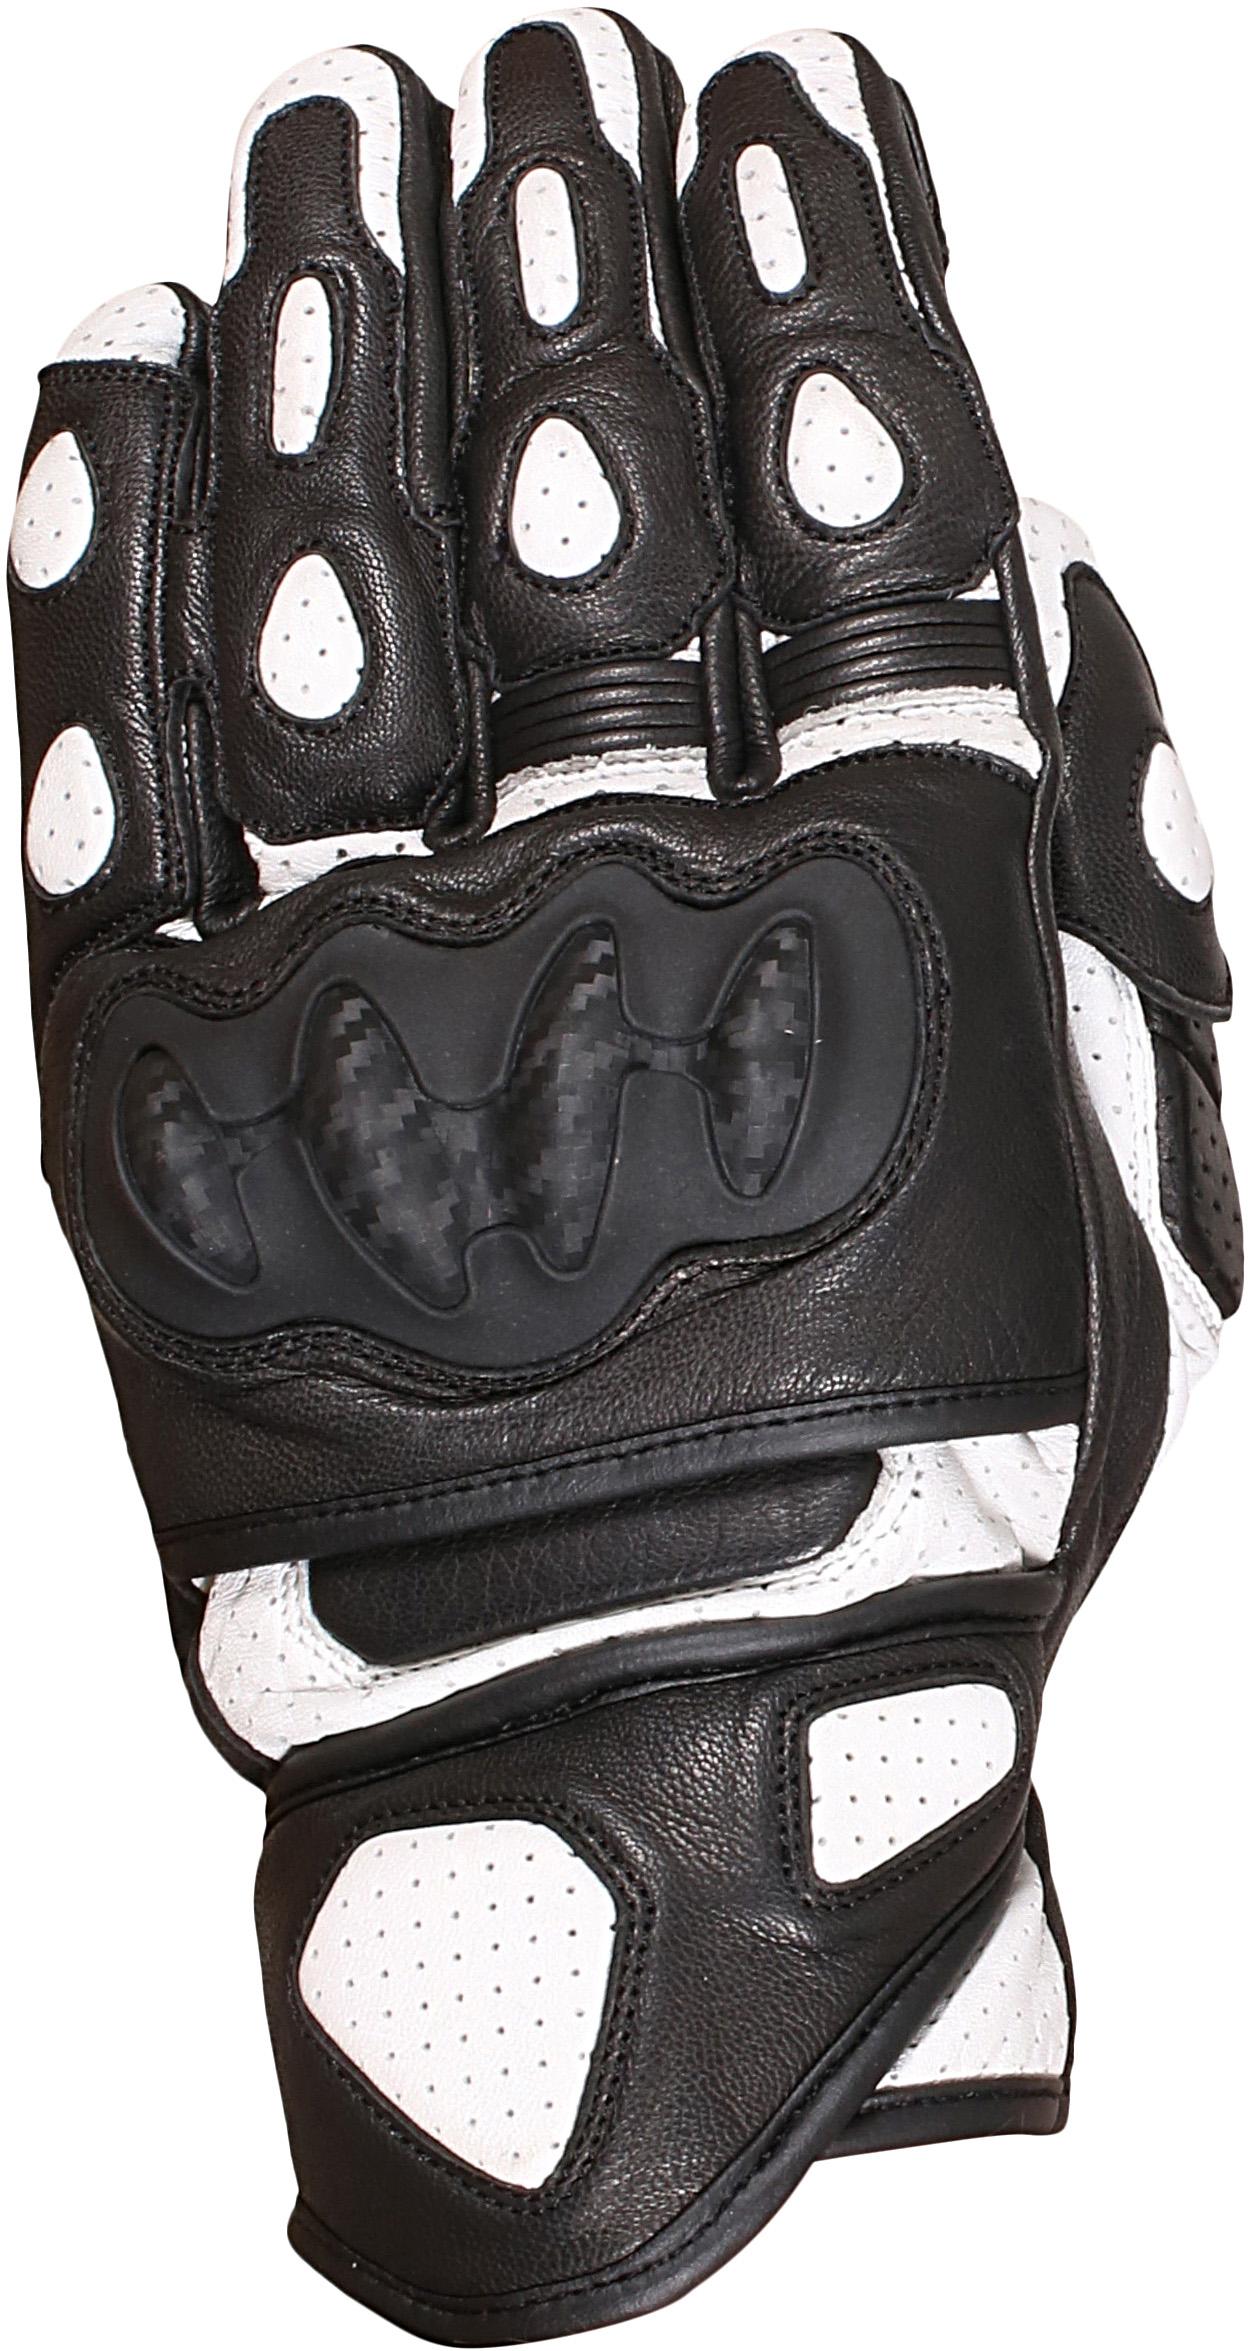 Weise Apex Motorcycle Gloves - Black/White, L